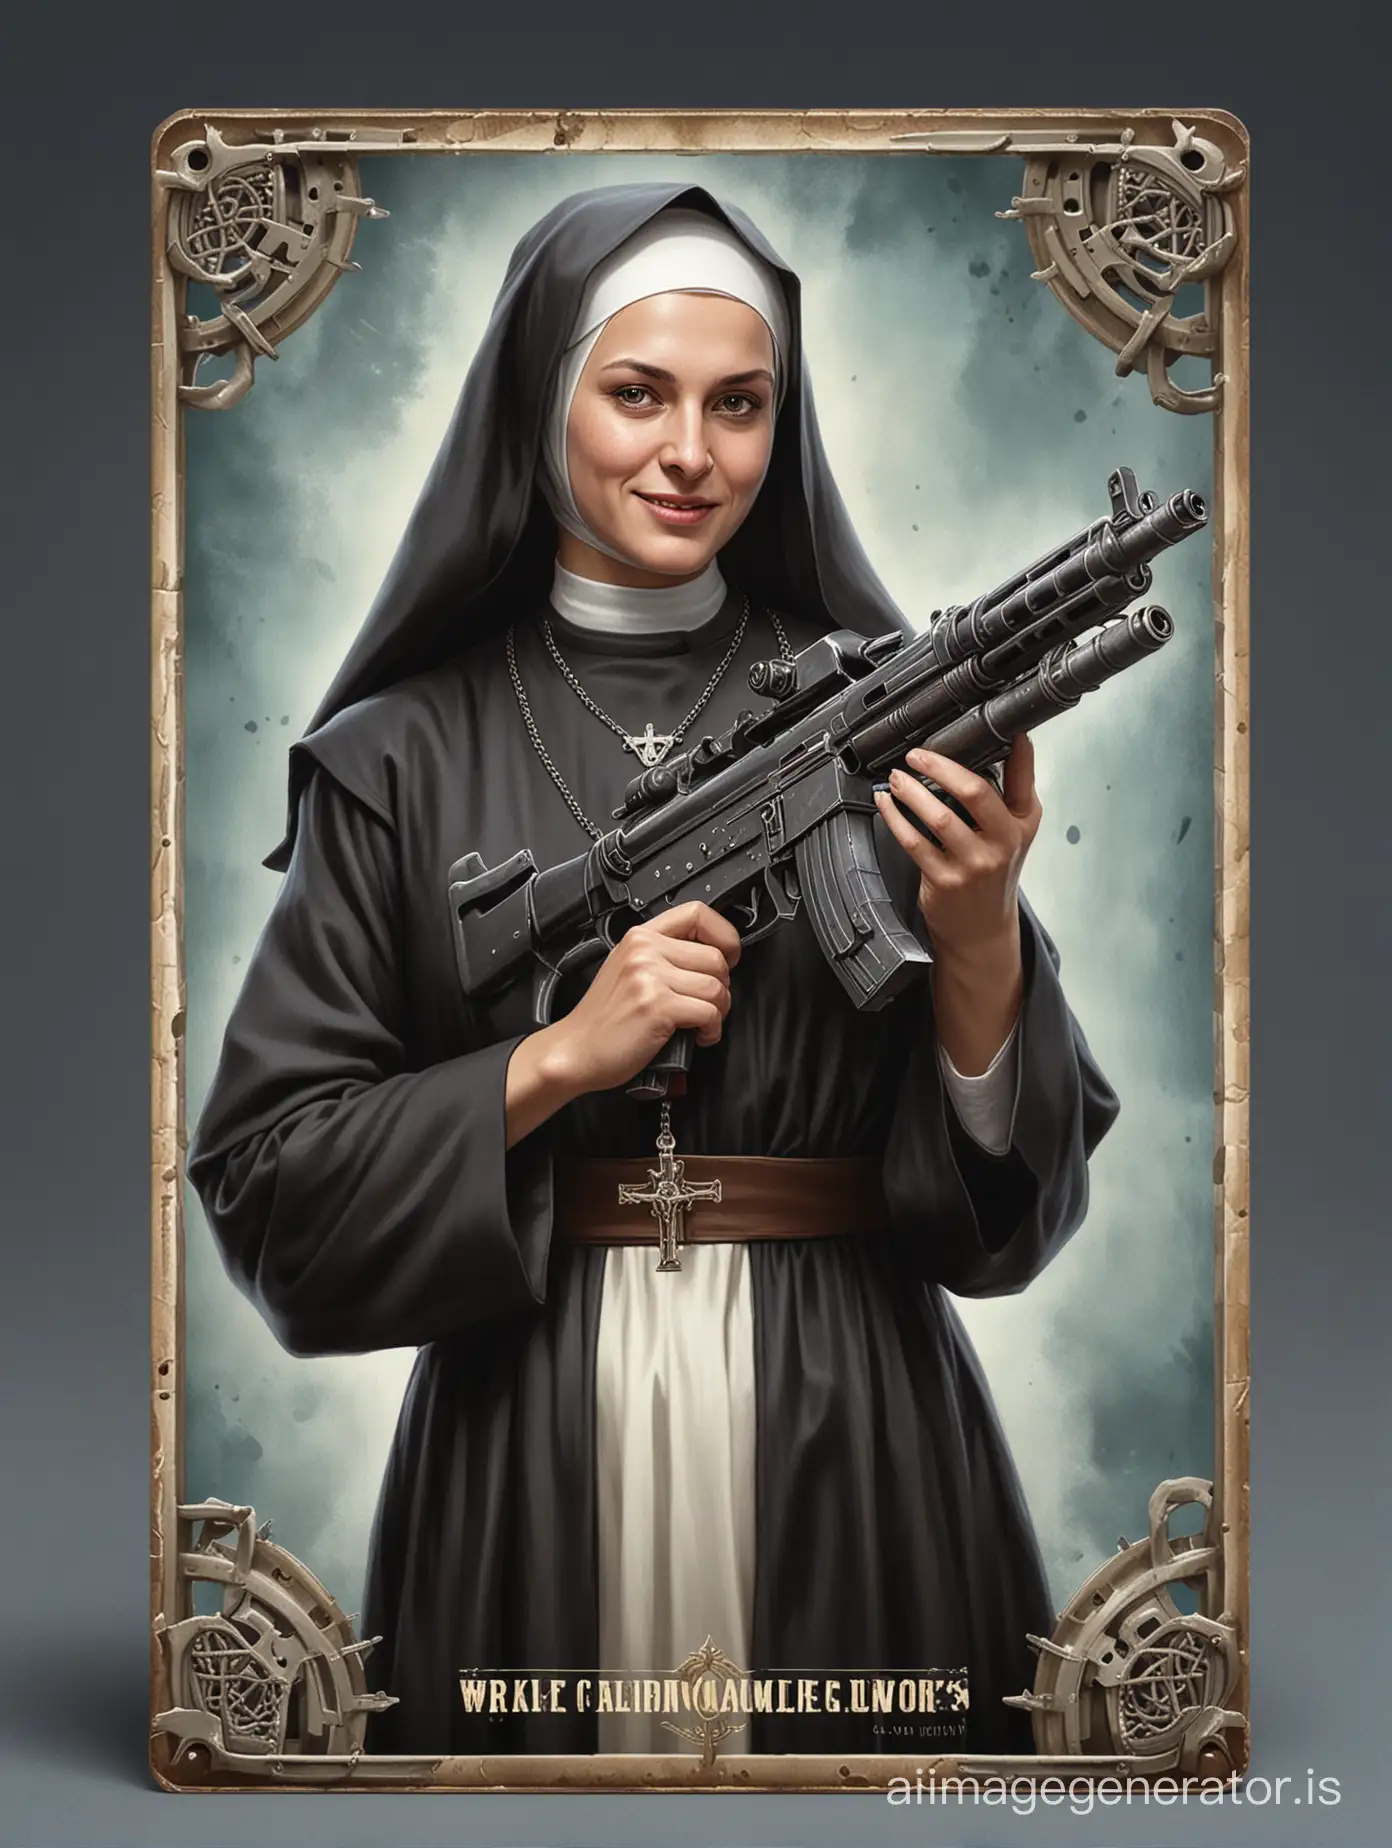 create a board game card depicting a nun holding a machine gun